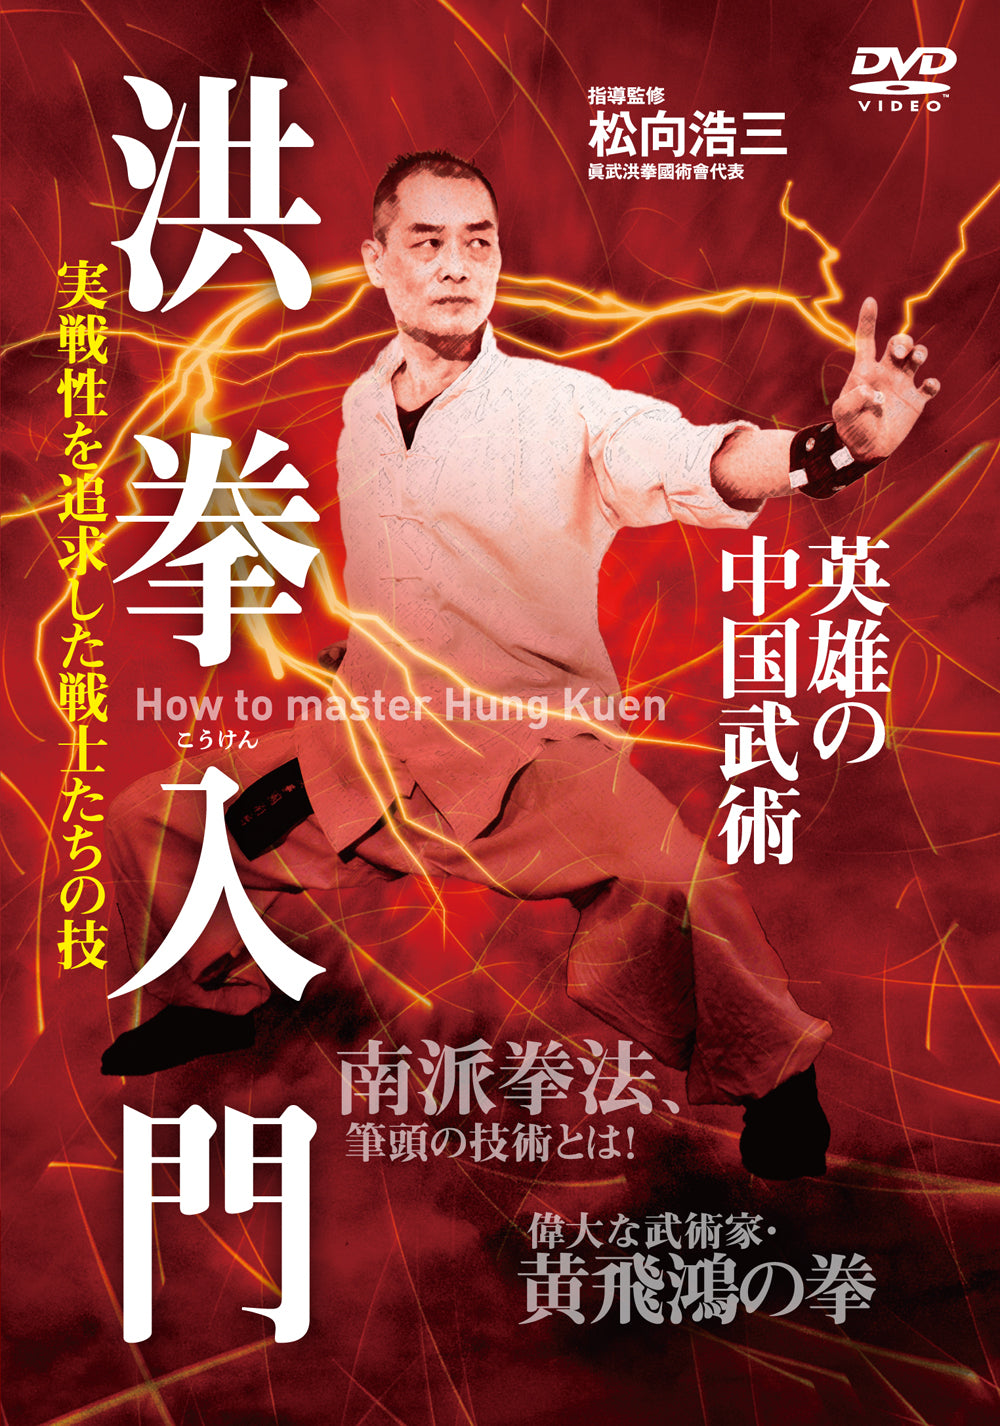 Cómo dominar el DVD Hung Kuen Kung Fu de Kozo Matsumuko